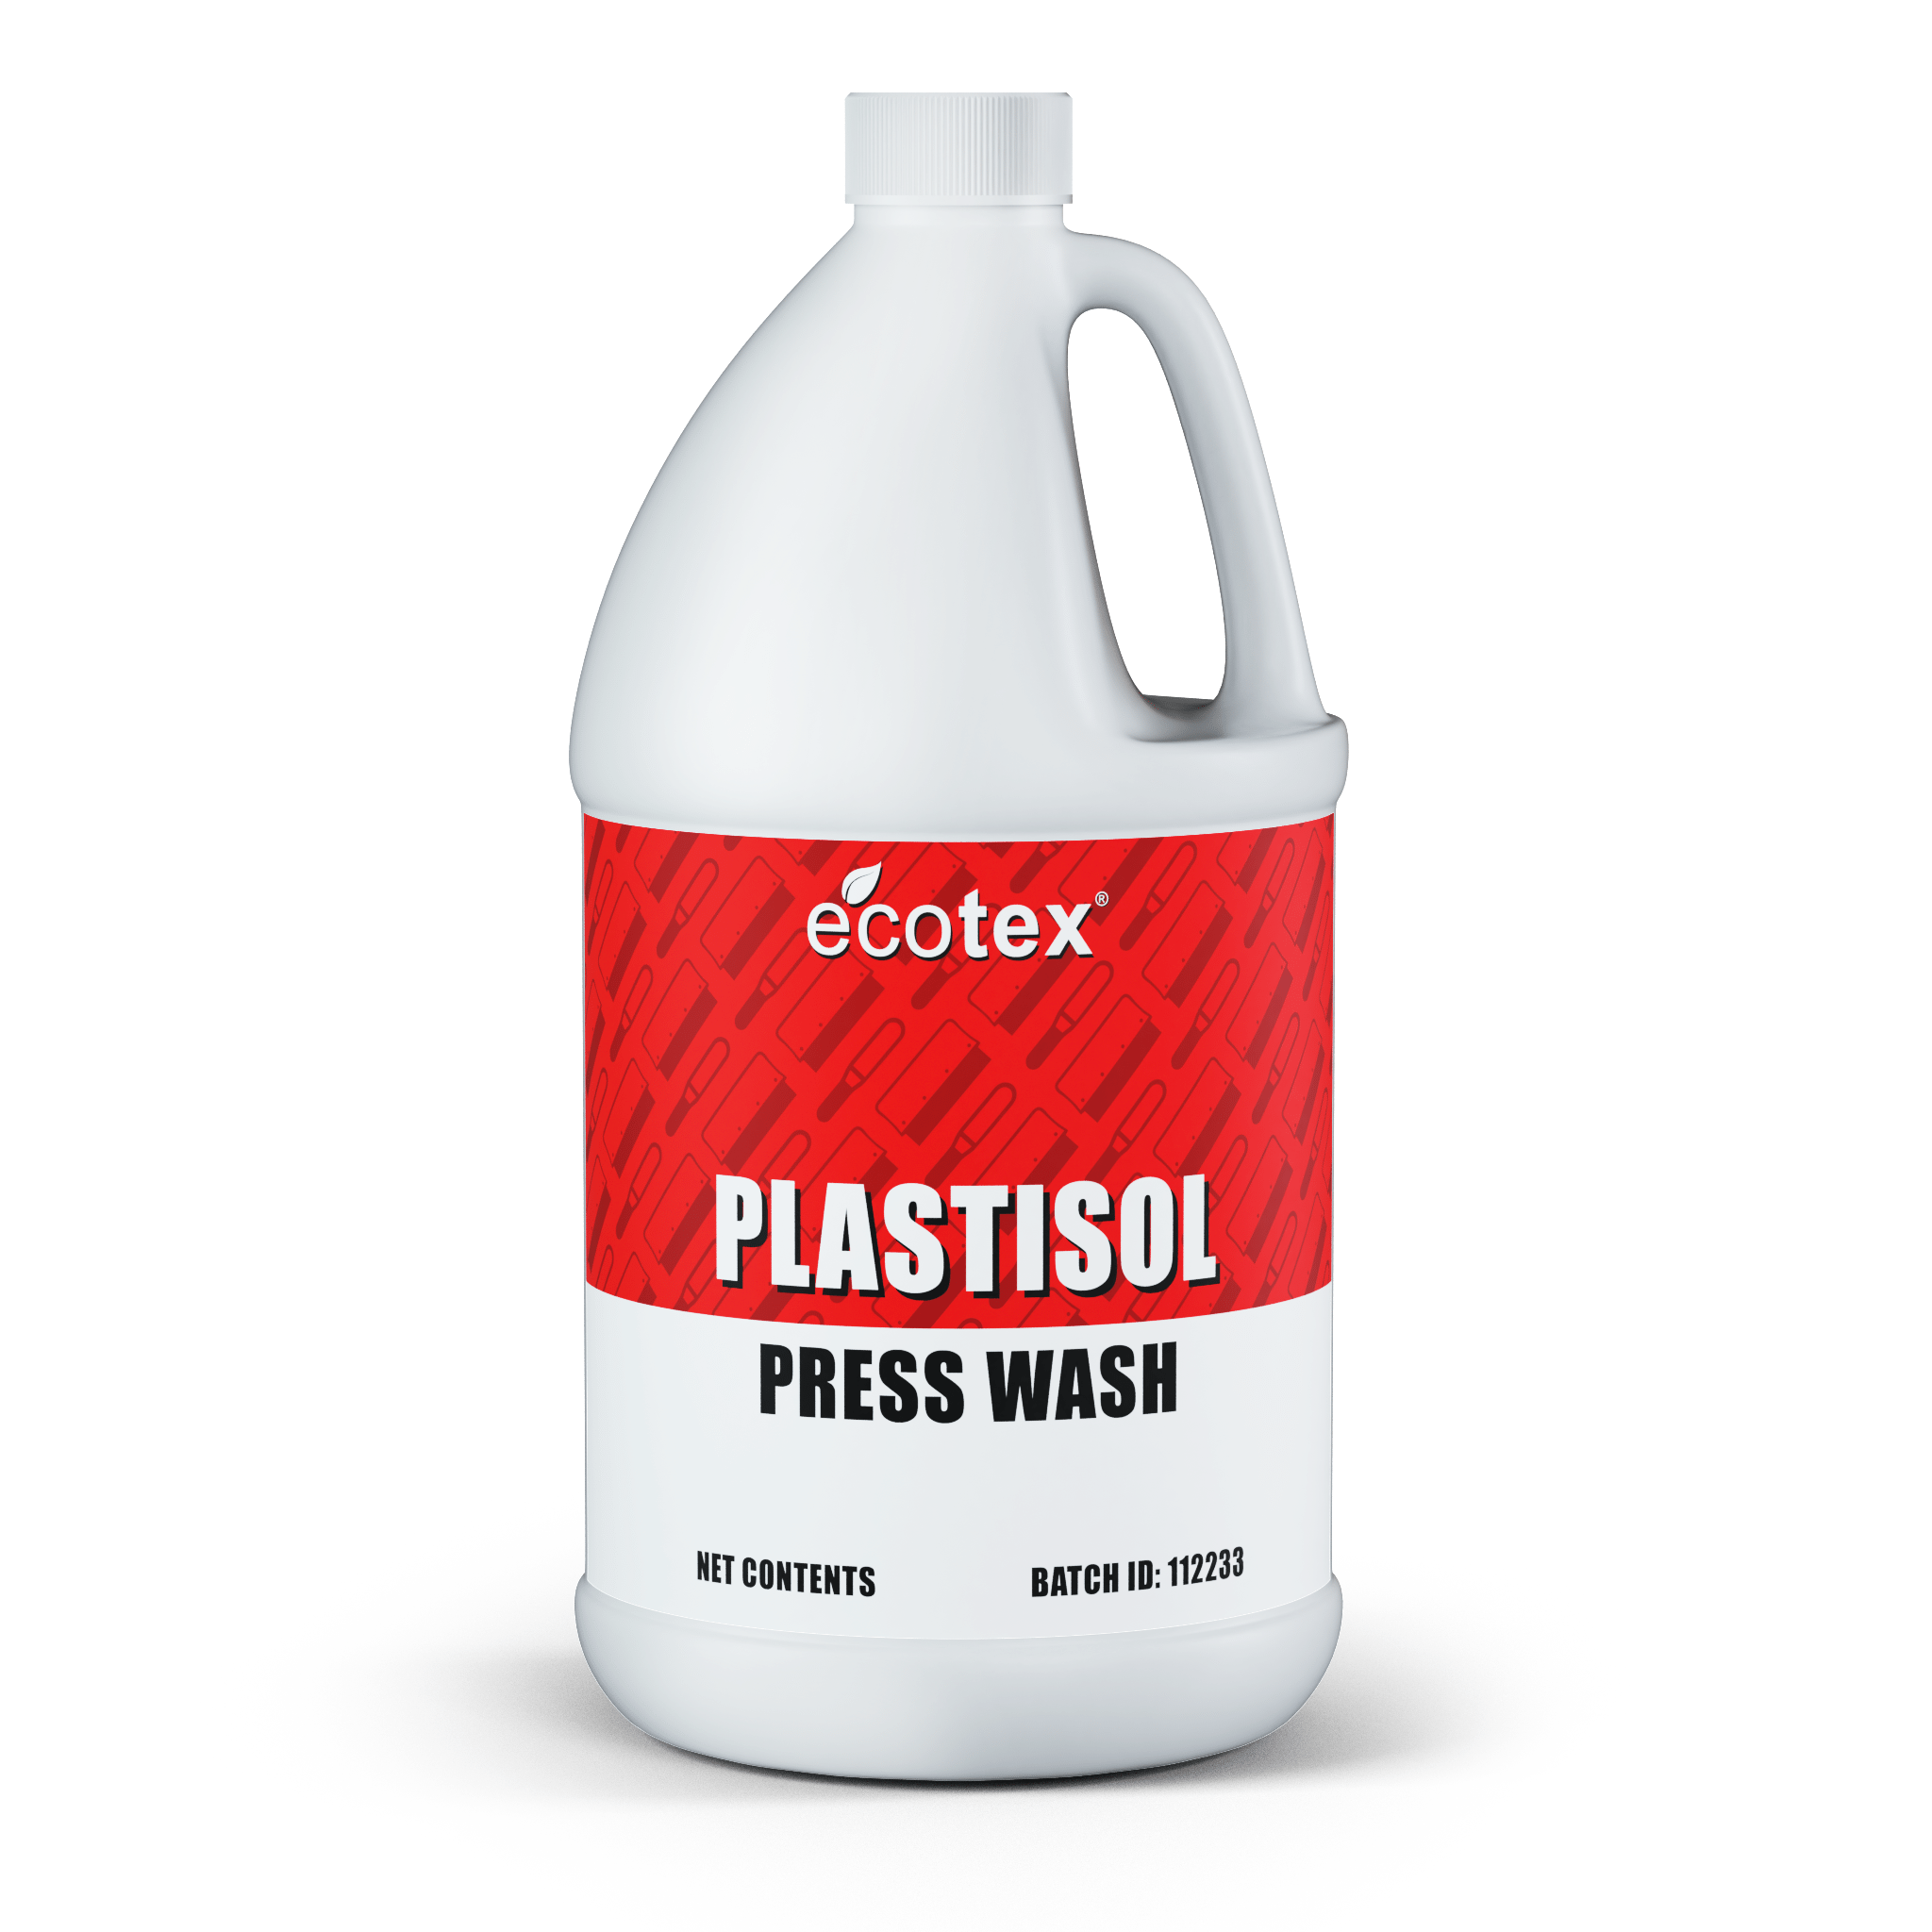 Plastisol Dispensing Pot Application Study